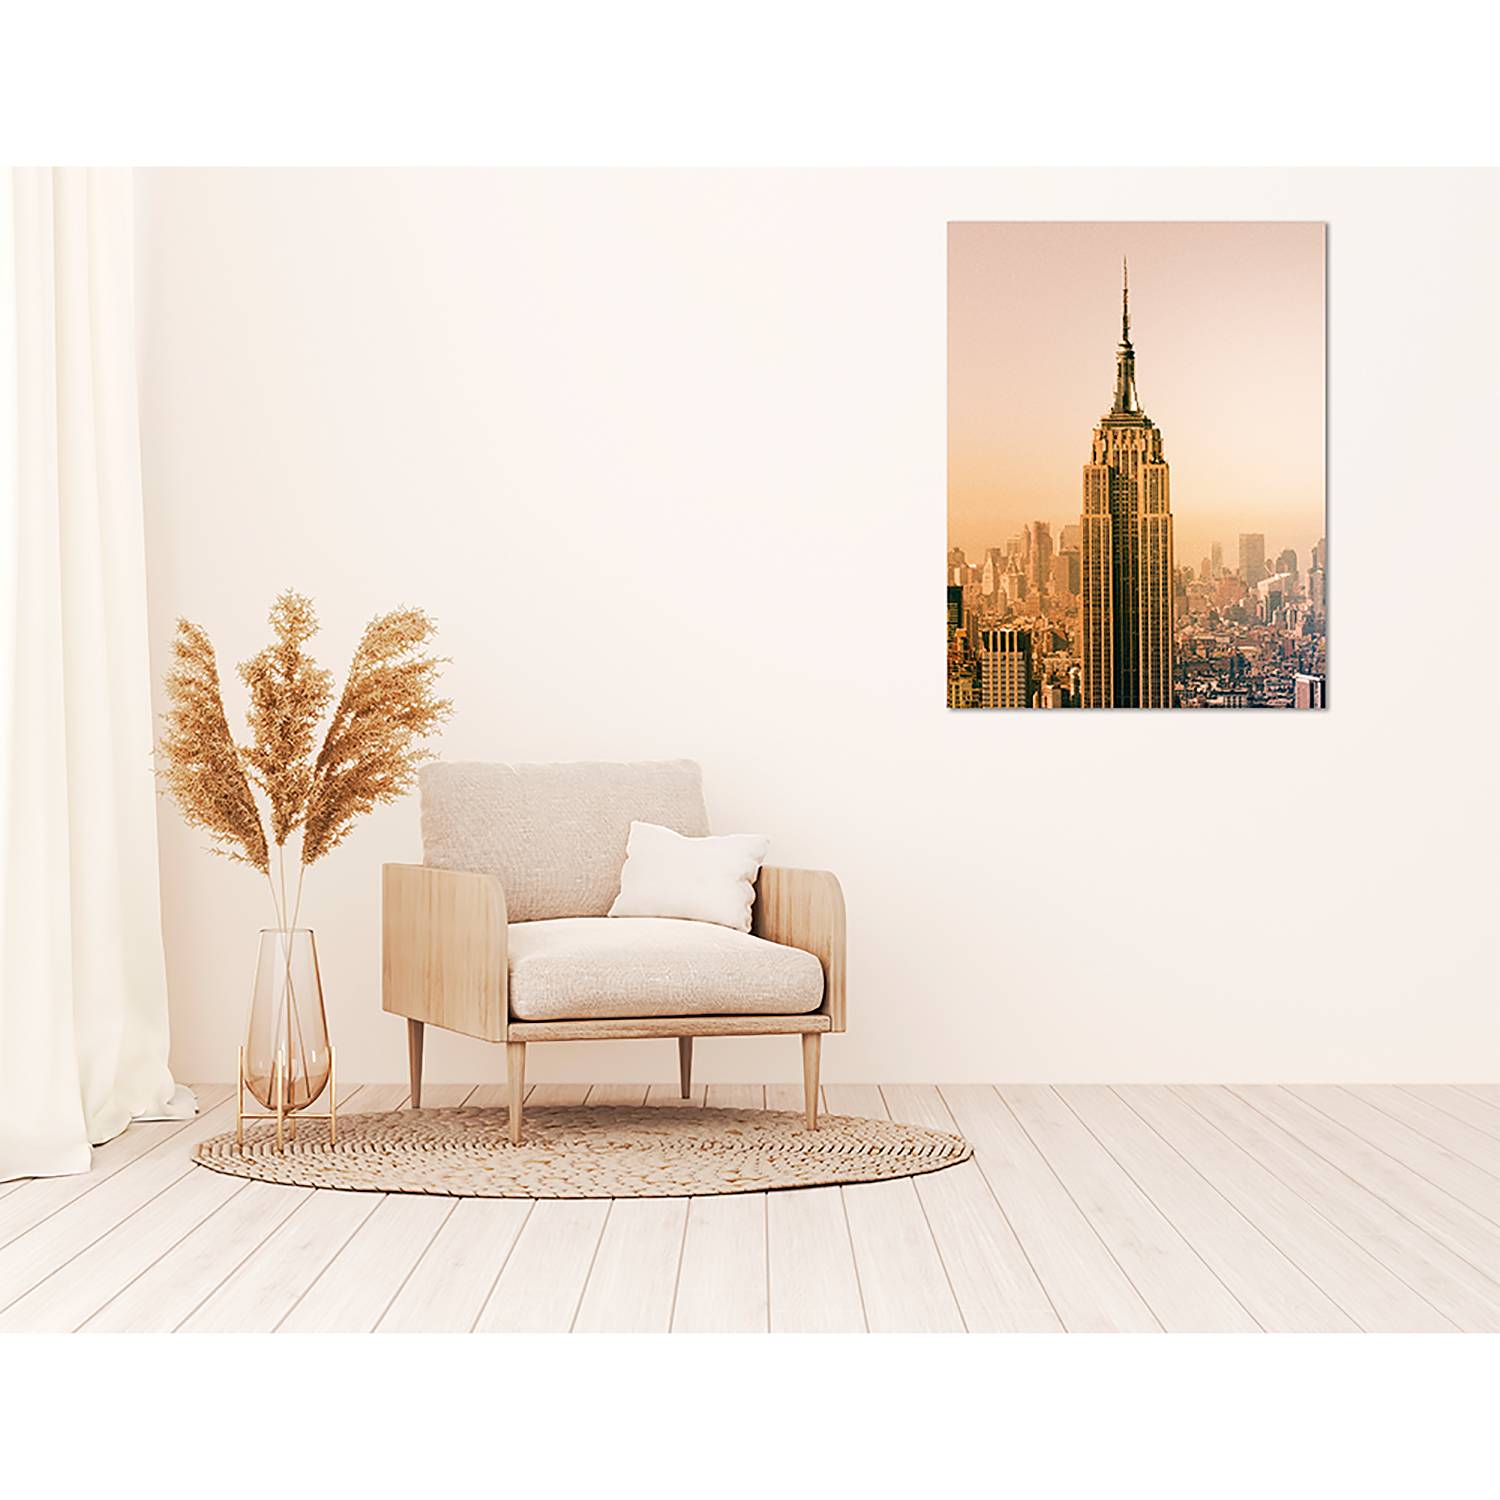 Bild Empire Skyline, NYC von Any Image